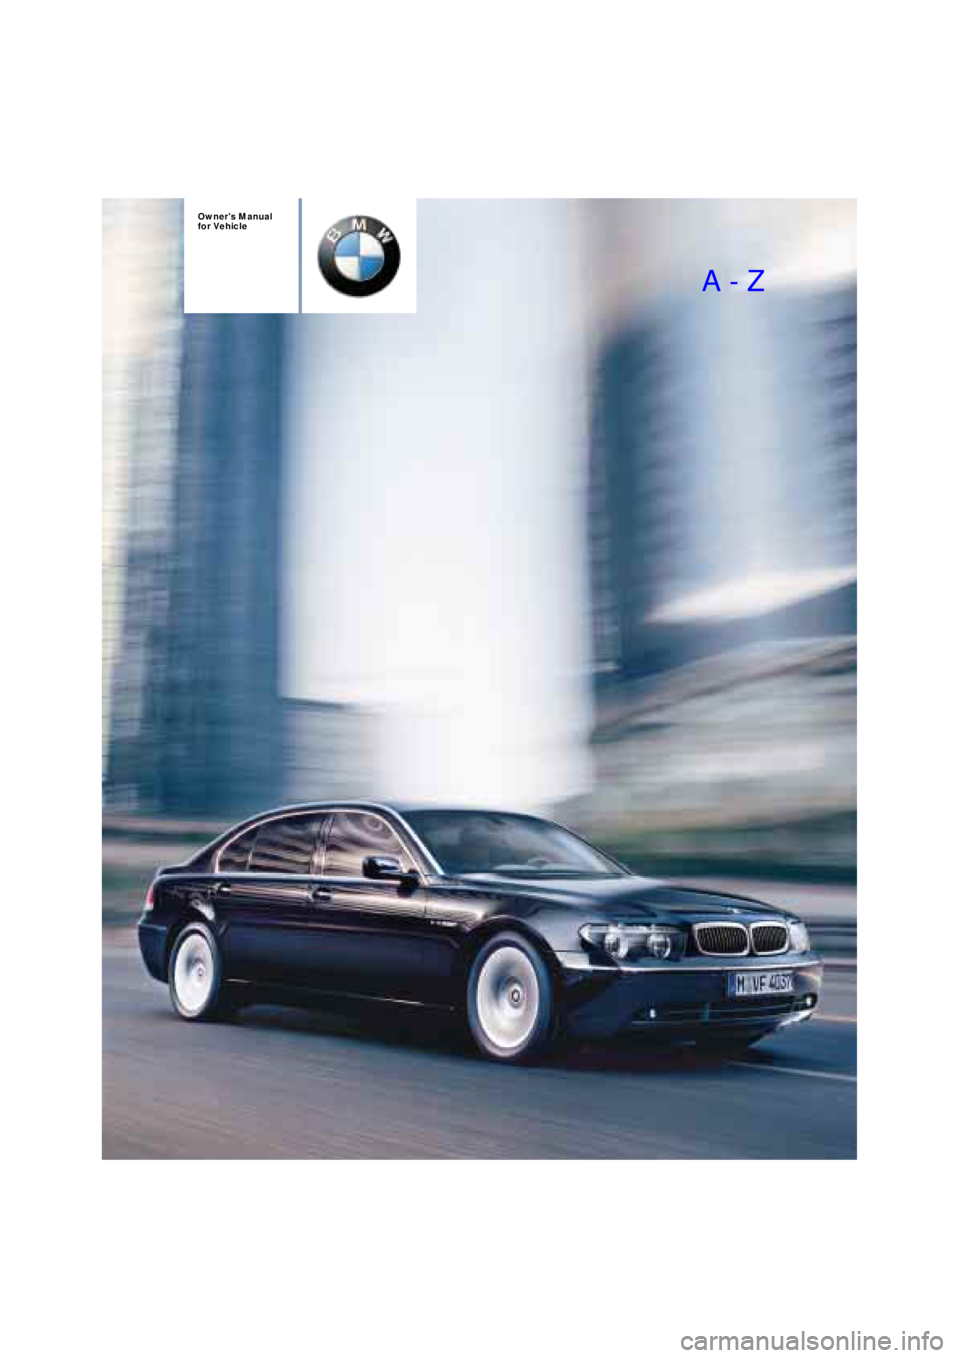 BMW 760LI SEDAN 2003  Owners Manual  
Owners Manual 
for Vehicle 